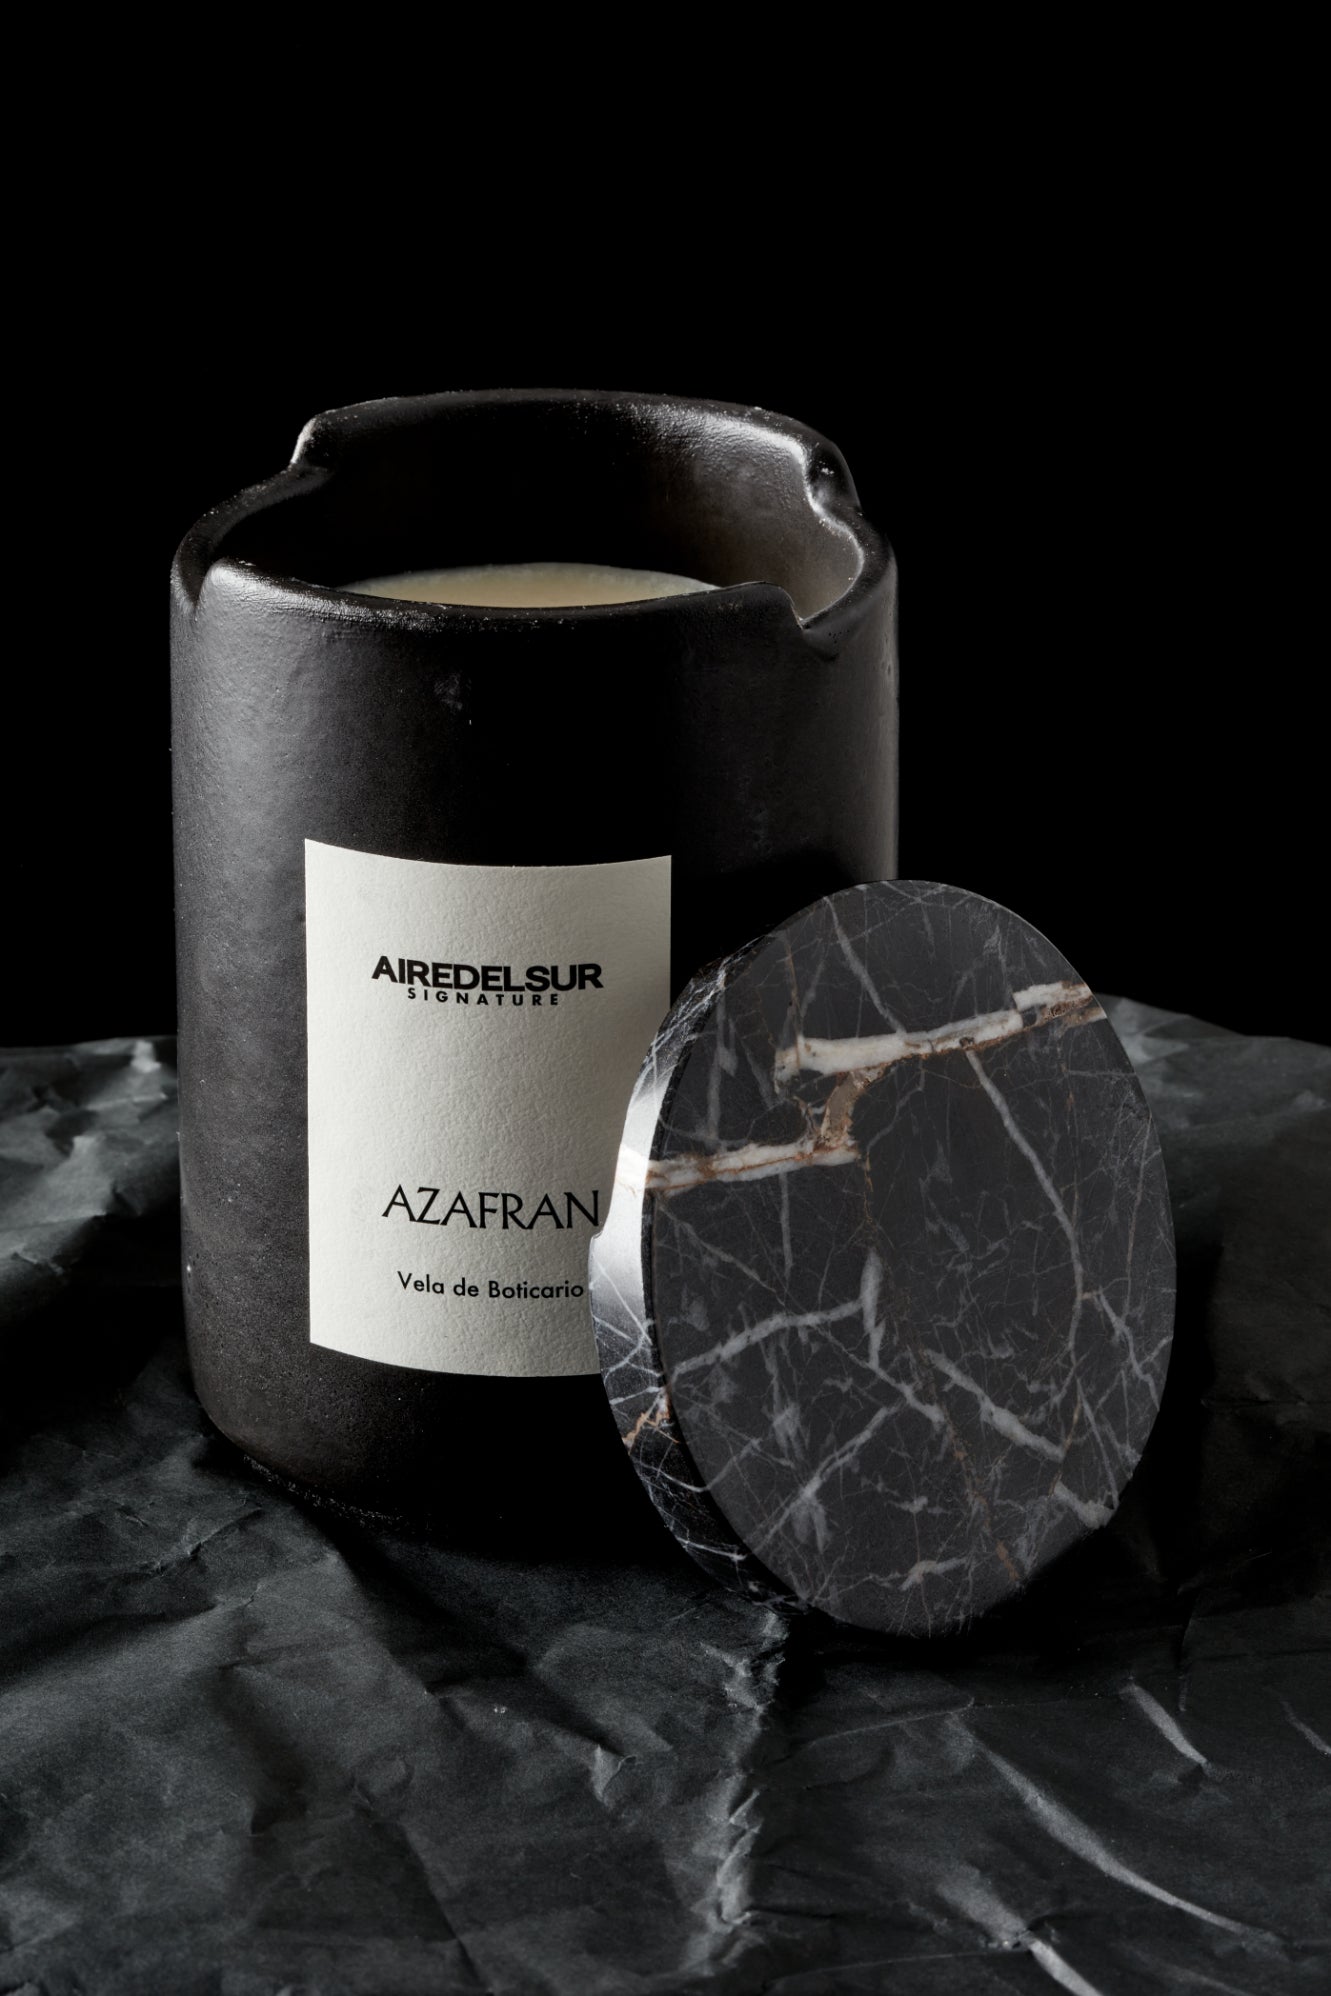 AZAFRAN Signature Scented Kerze, handbemalte Keramik und natürlicher Onyxstein